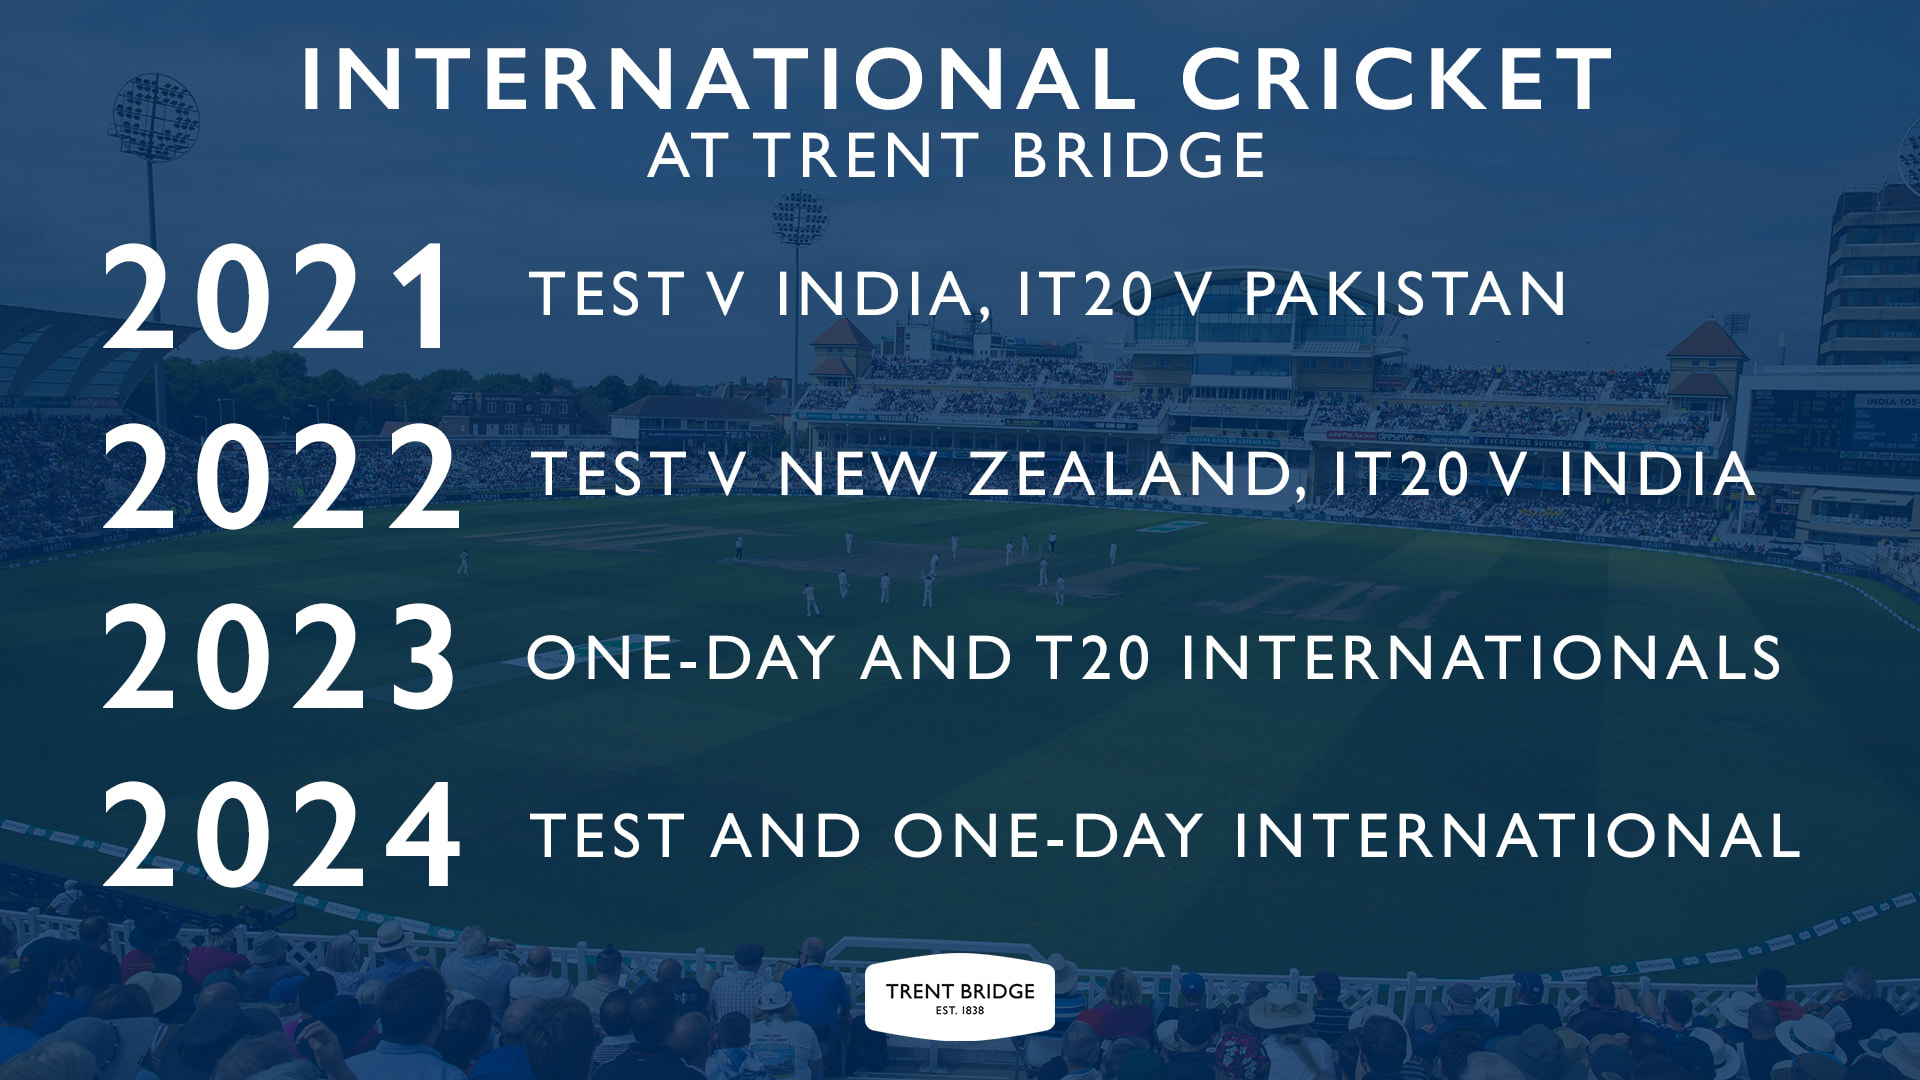 Trent Bridge Register your interest in international cricket